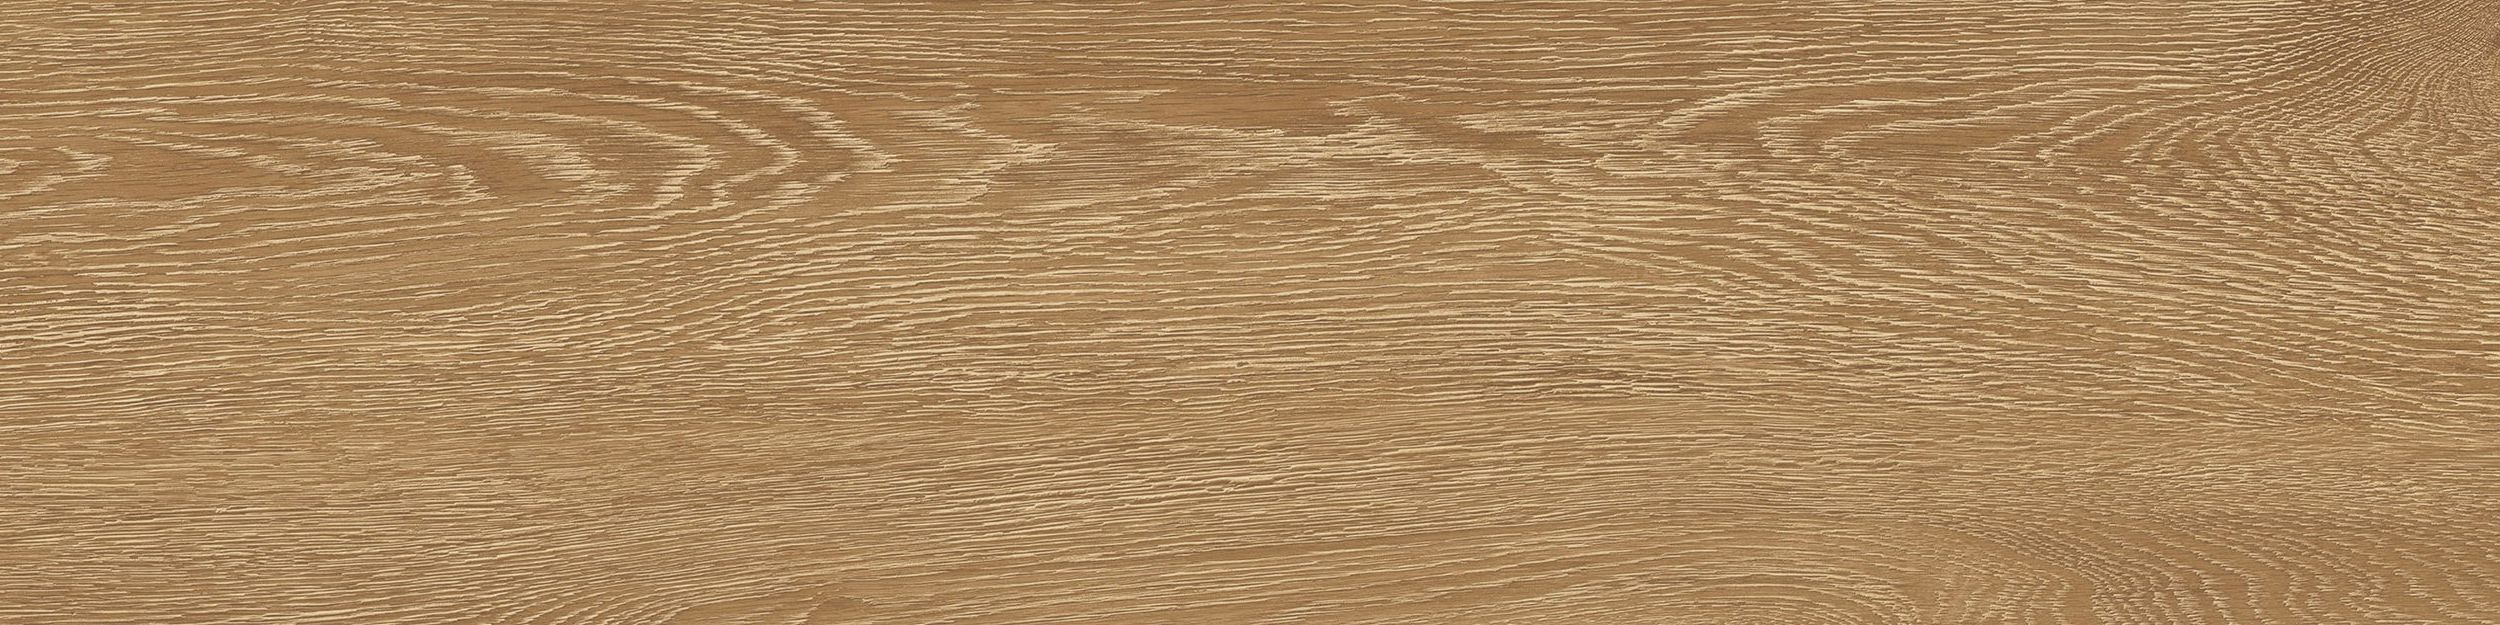 Textured Woodgrains LVT In Antique Oak número de imagen 3